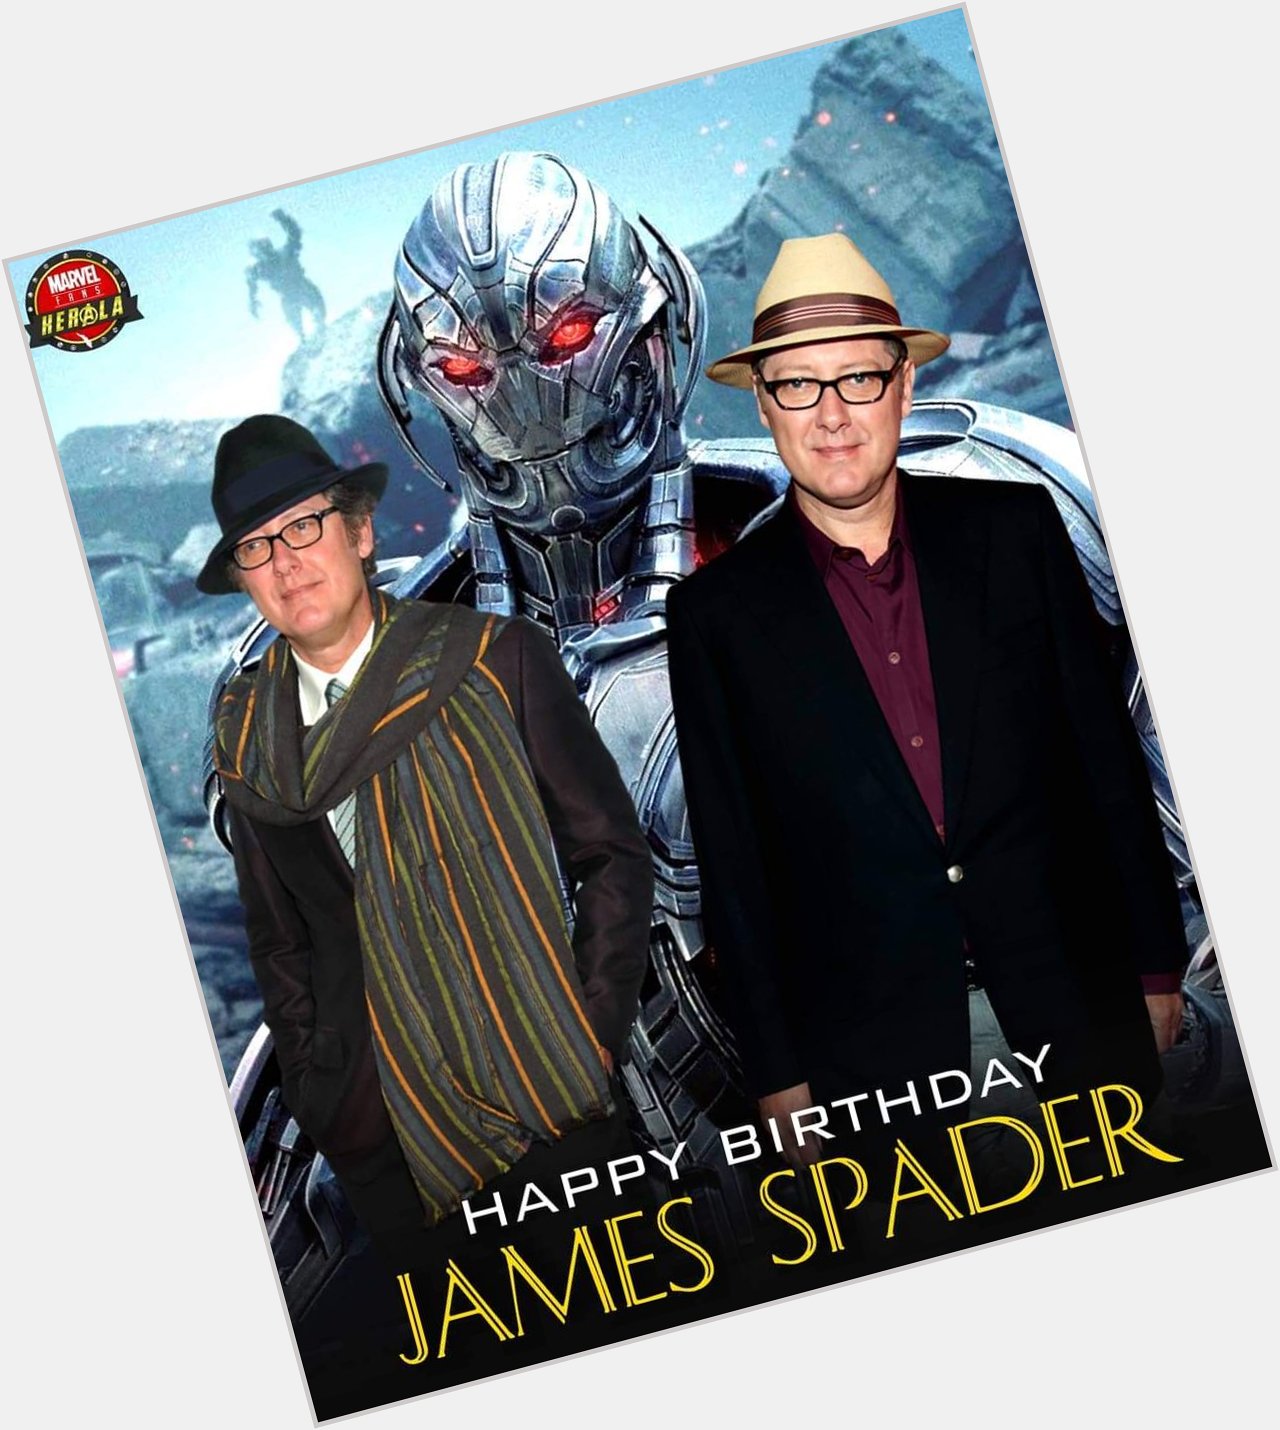 Happy birthday james spader. Hez a wonderful man amd actor.  